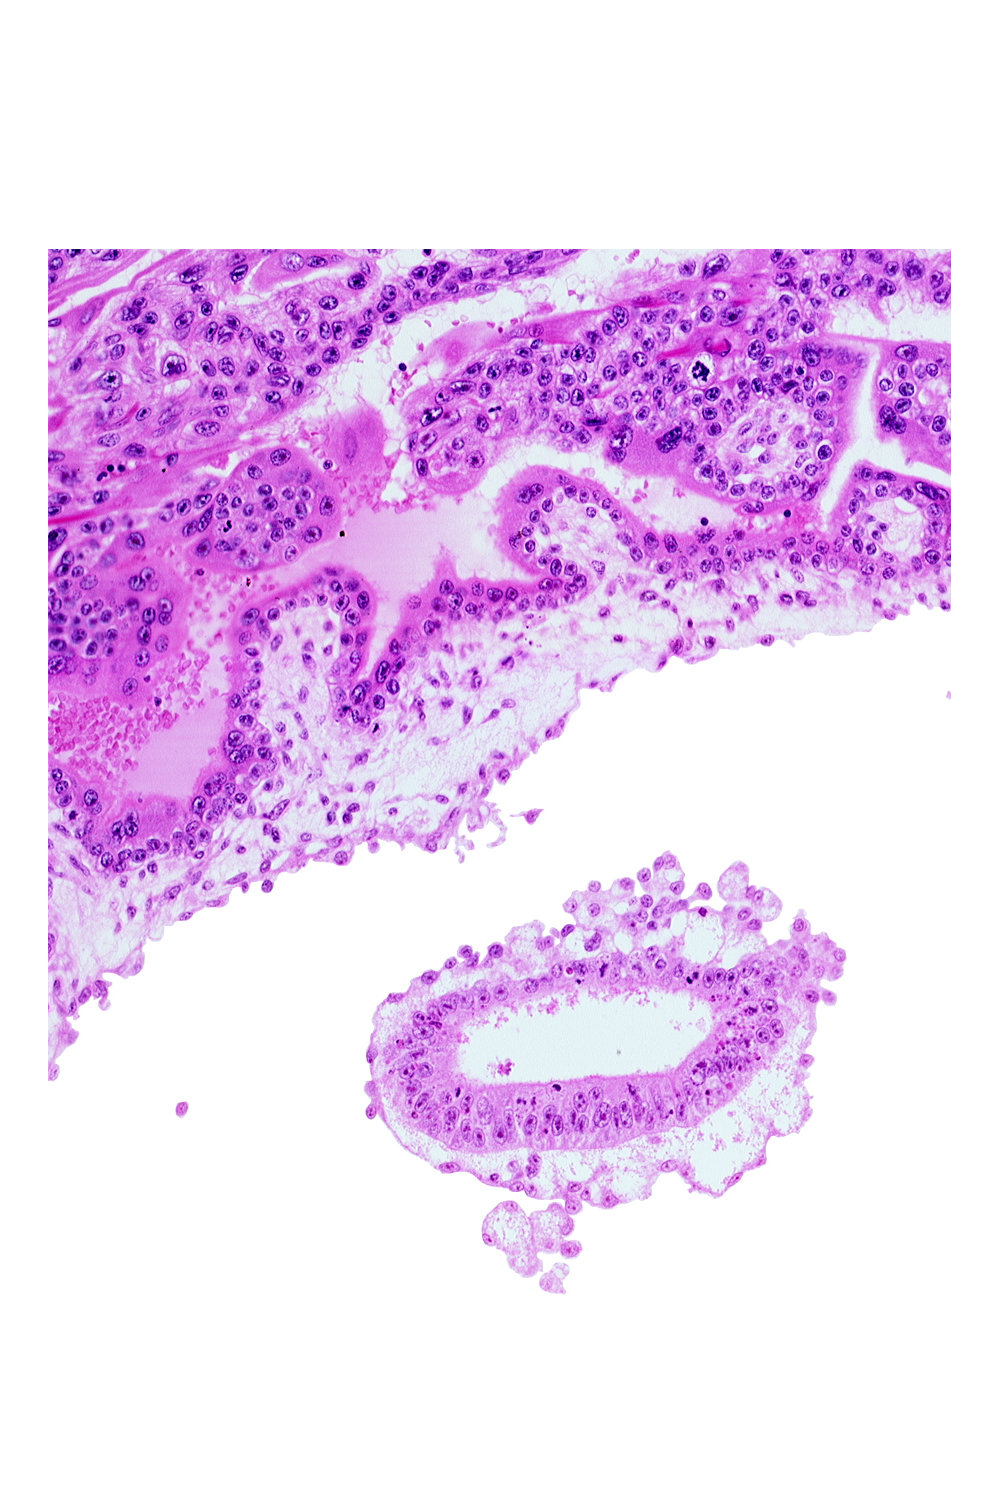 amniotic cavity, chorionic cavity, epiblast, mesoblast, primordial blood vessel(s)